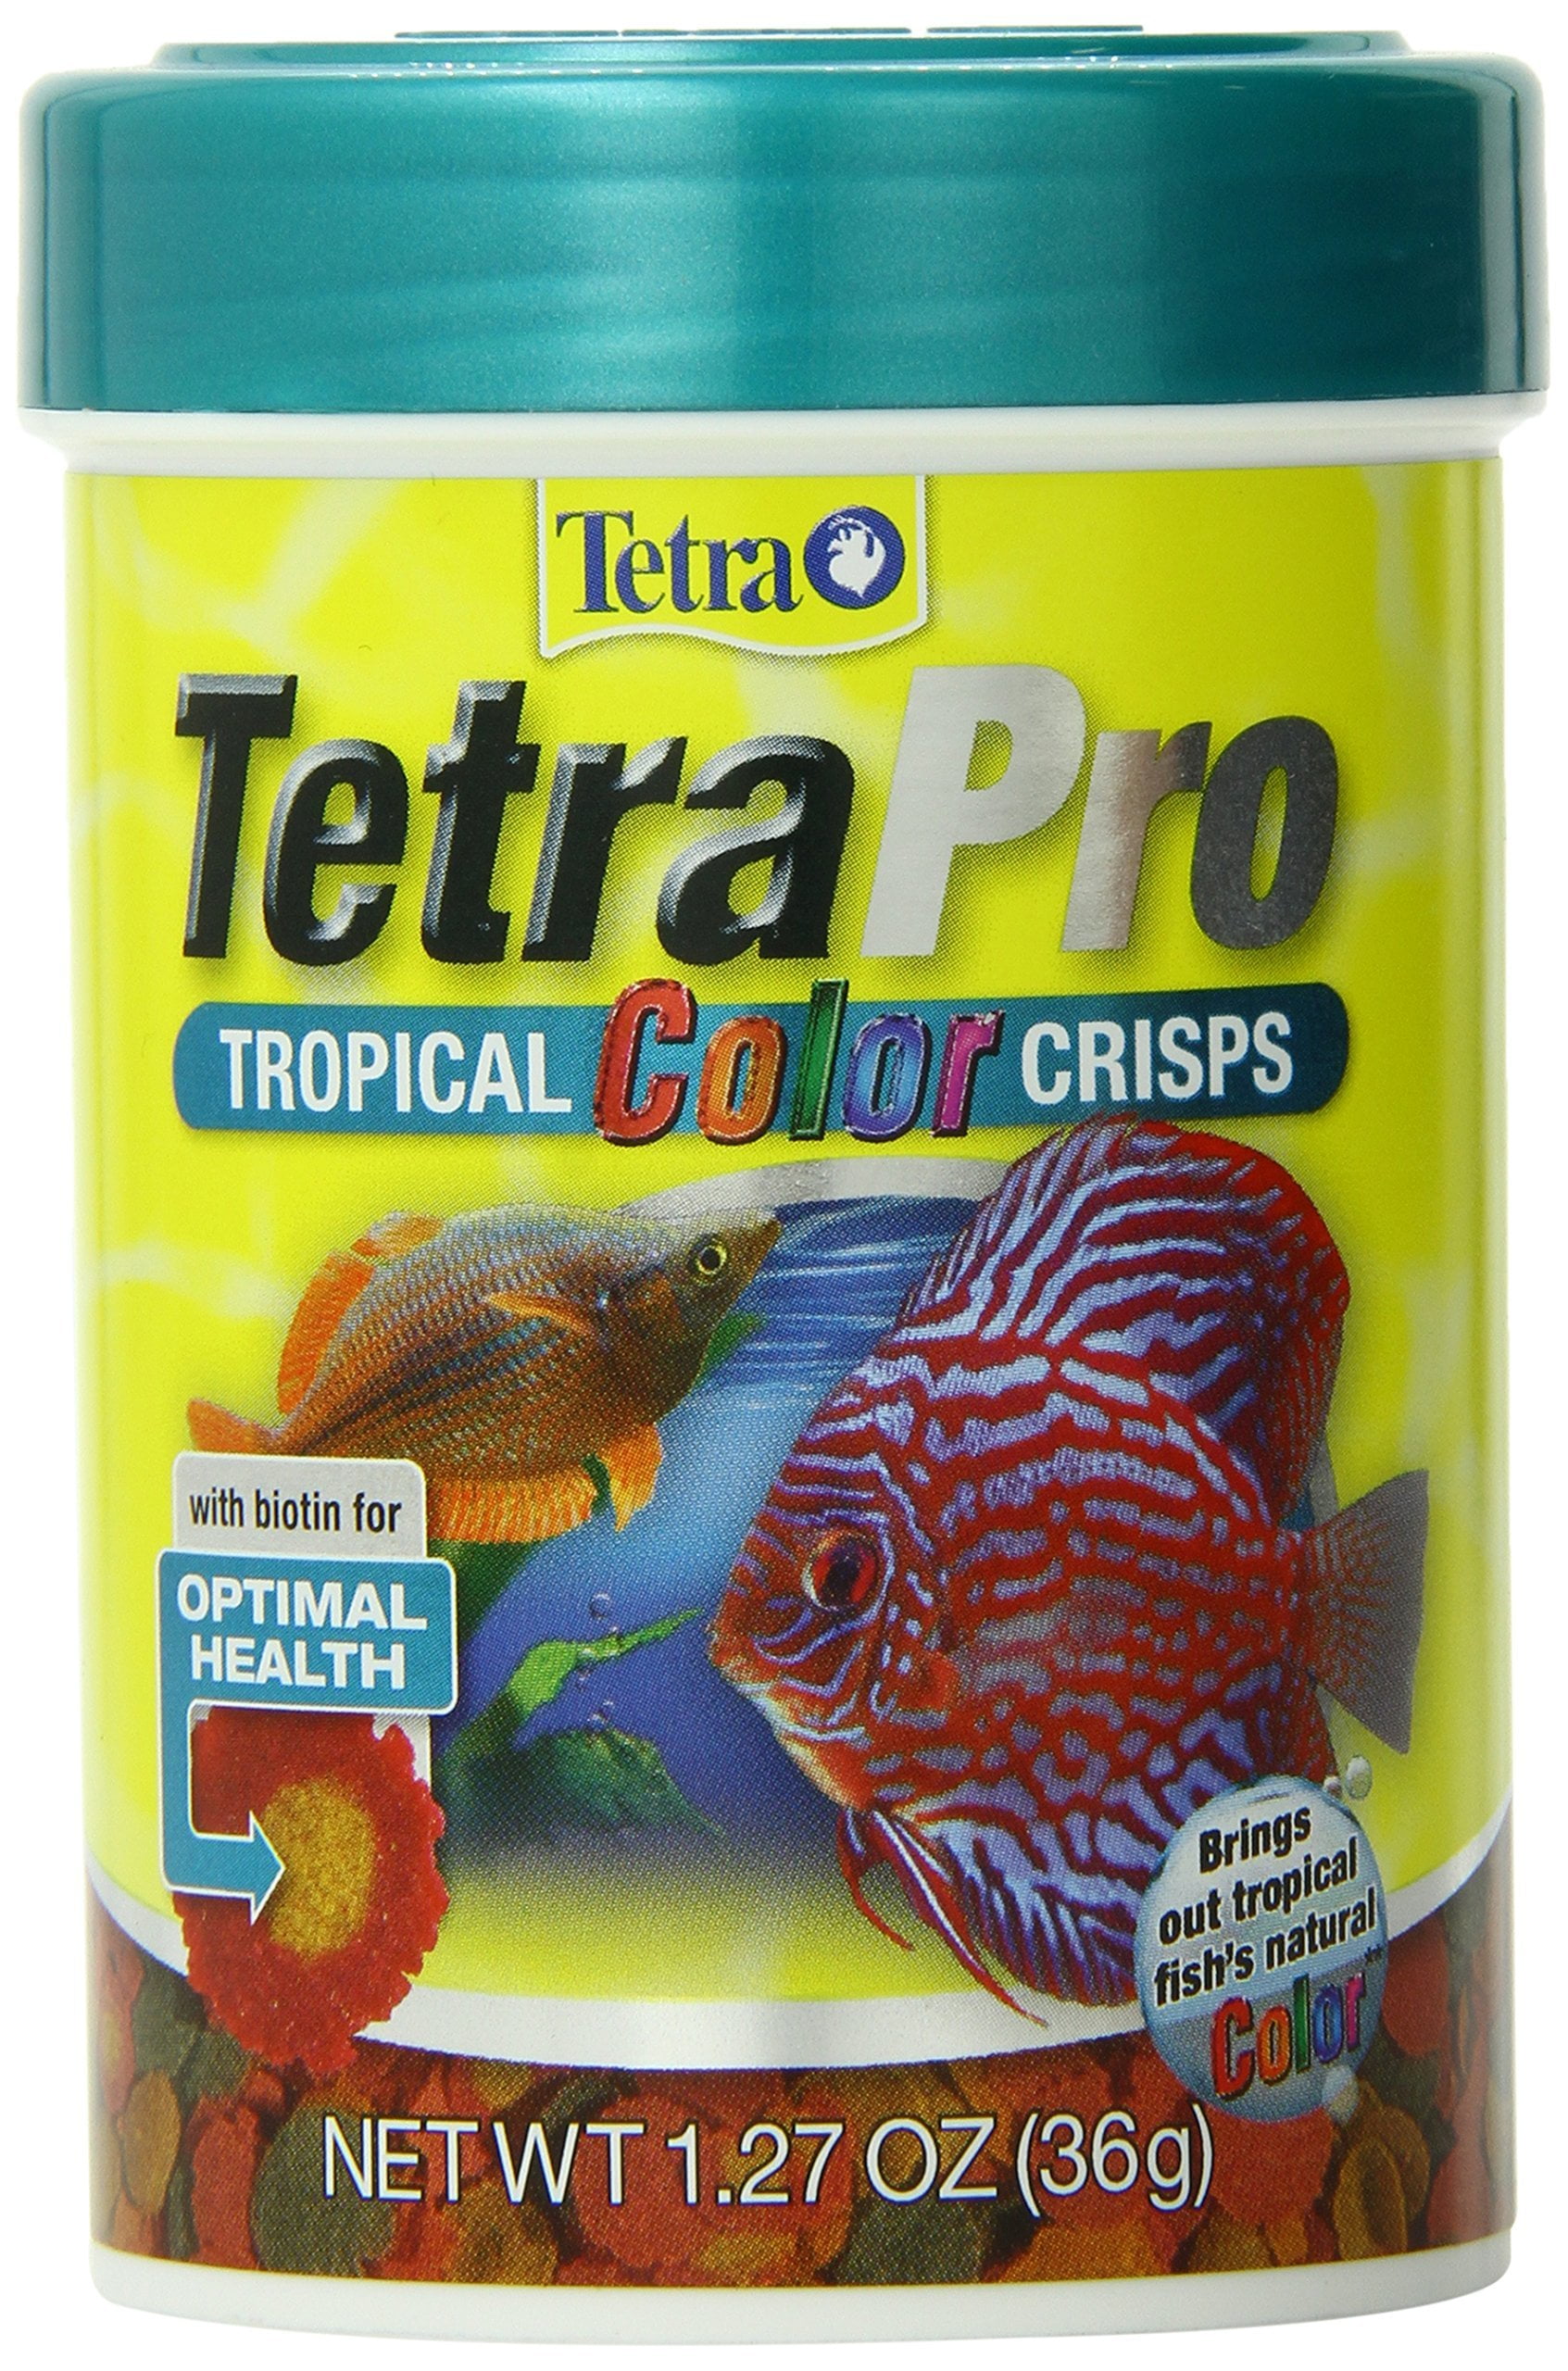 TETRA TetraPro Energy Multi-Crisps 500ml Pokarm 8863288030